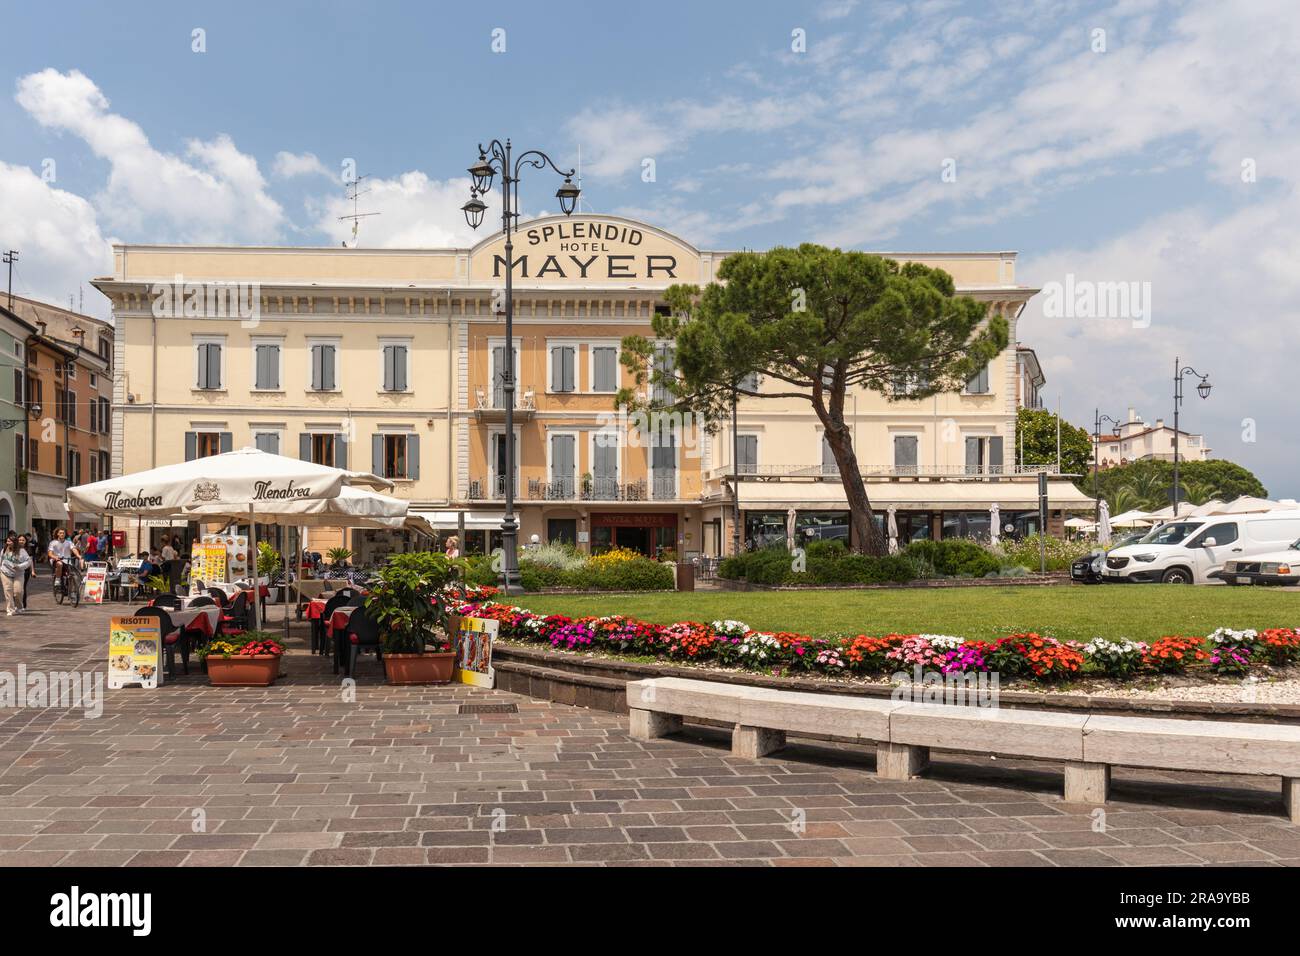 Splendid Hotel Mayer in Desenzano, Gardasee, Italien, Europa Stockfoto